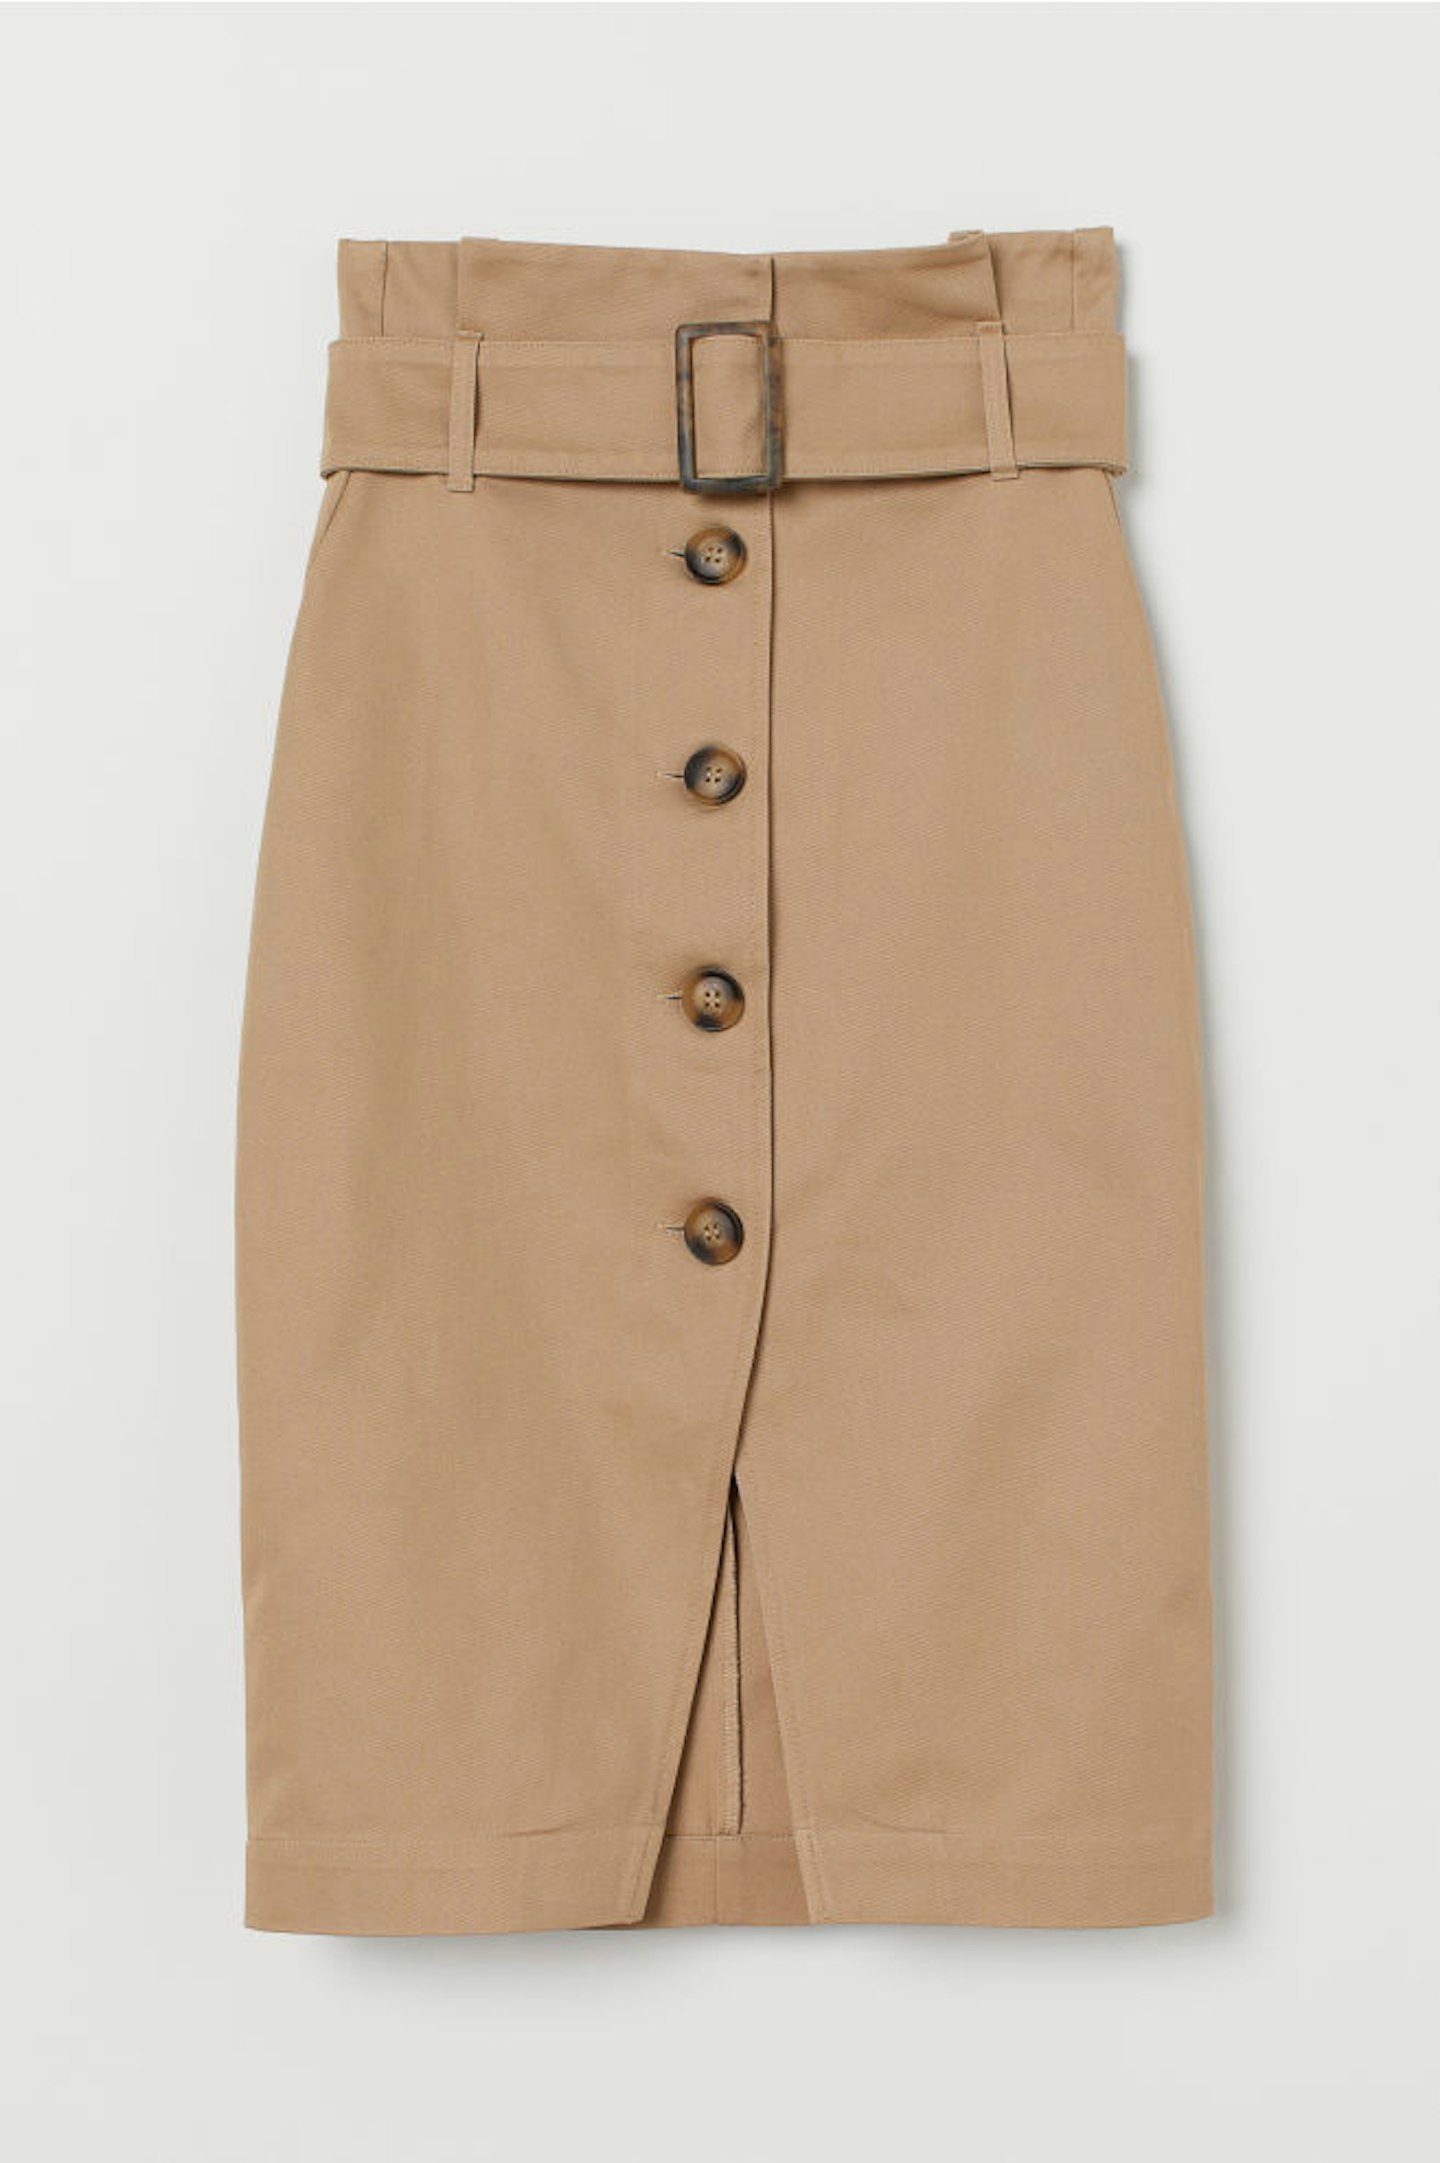 H&M, Skirt With A Belt, £24.99